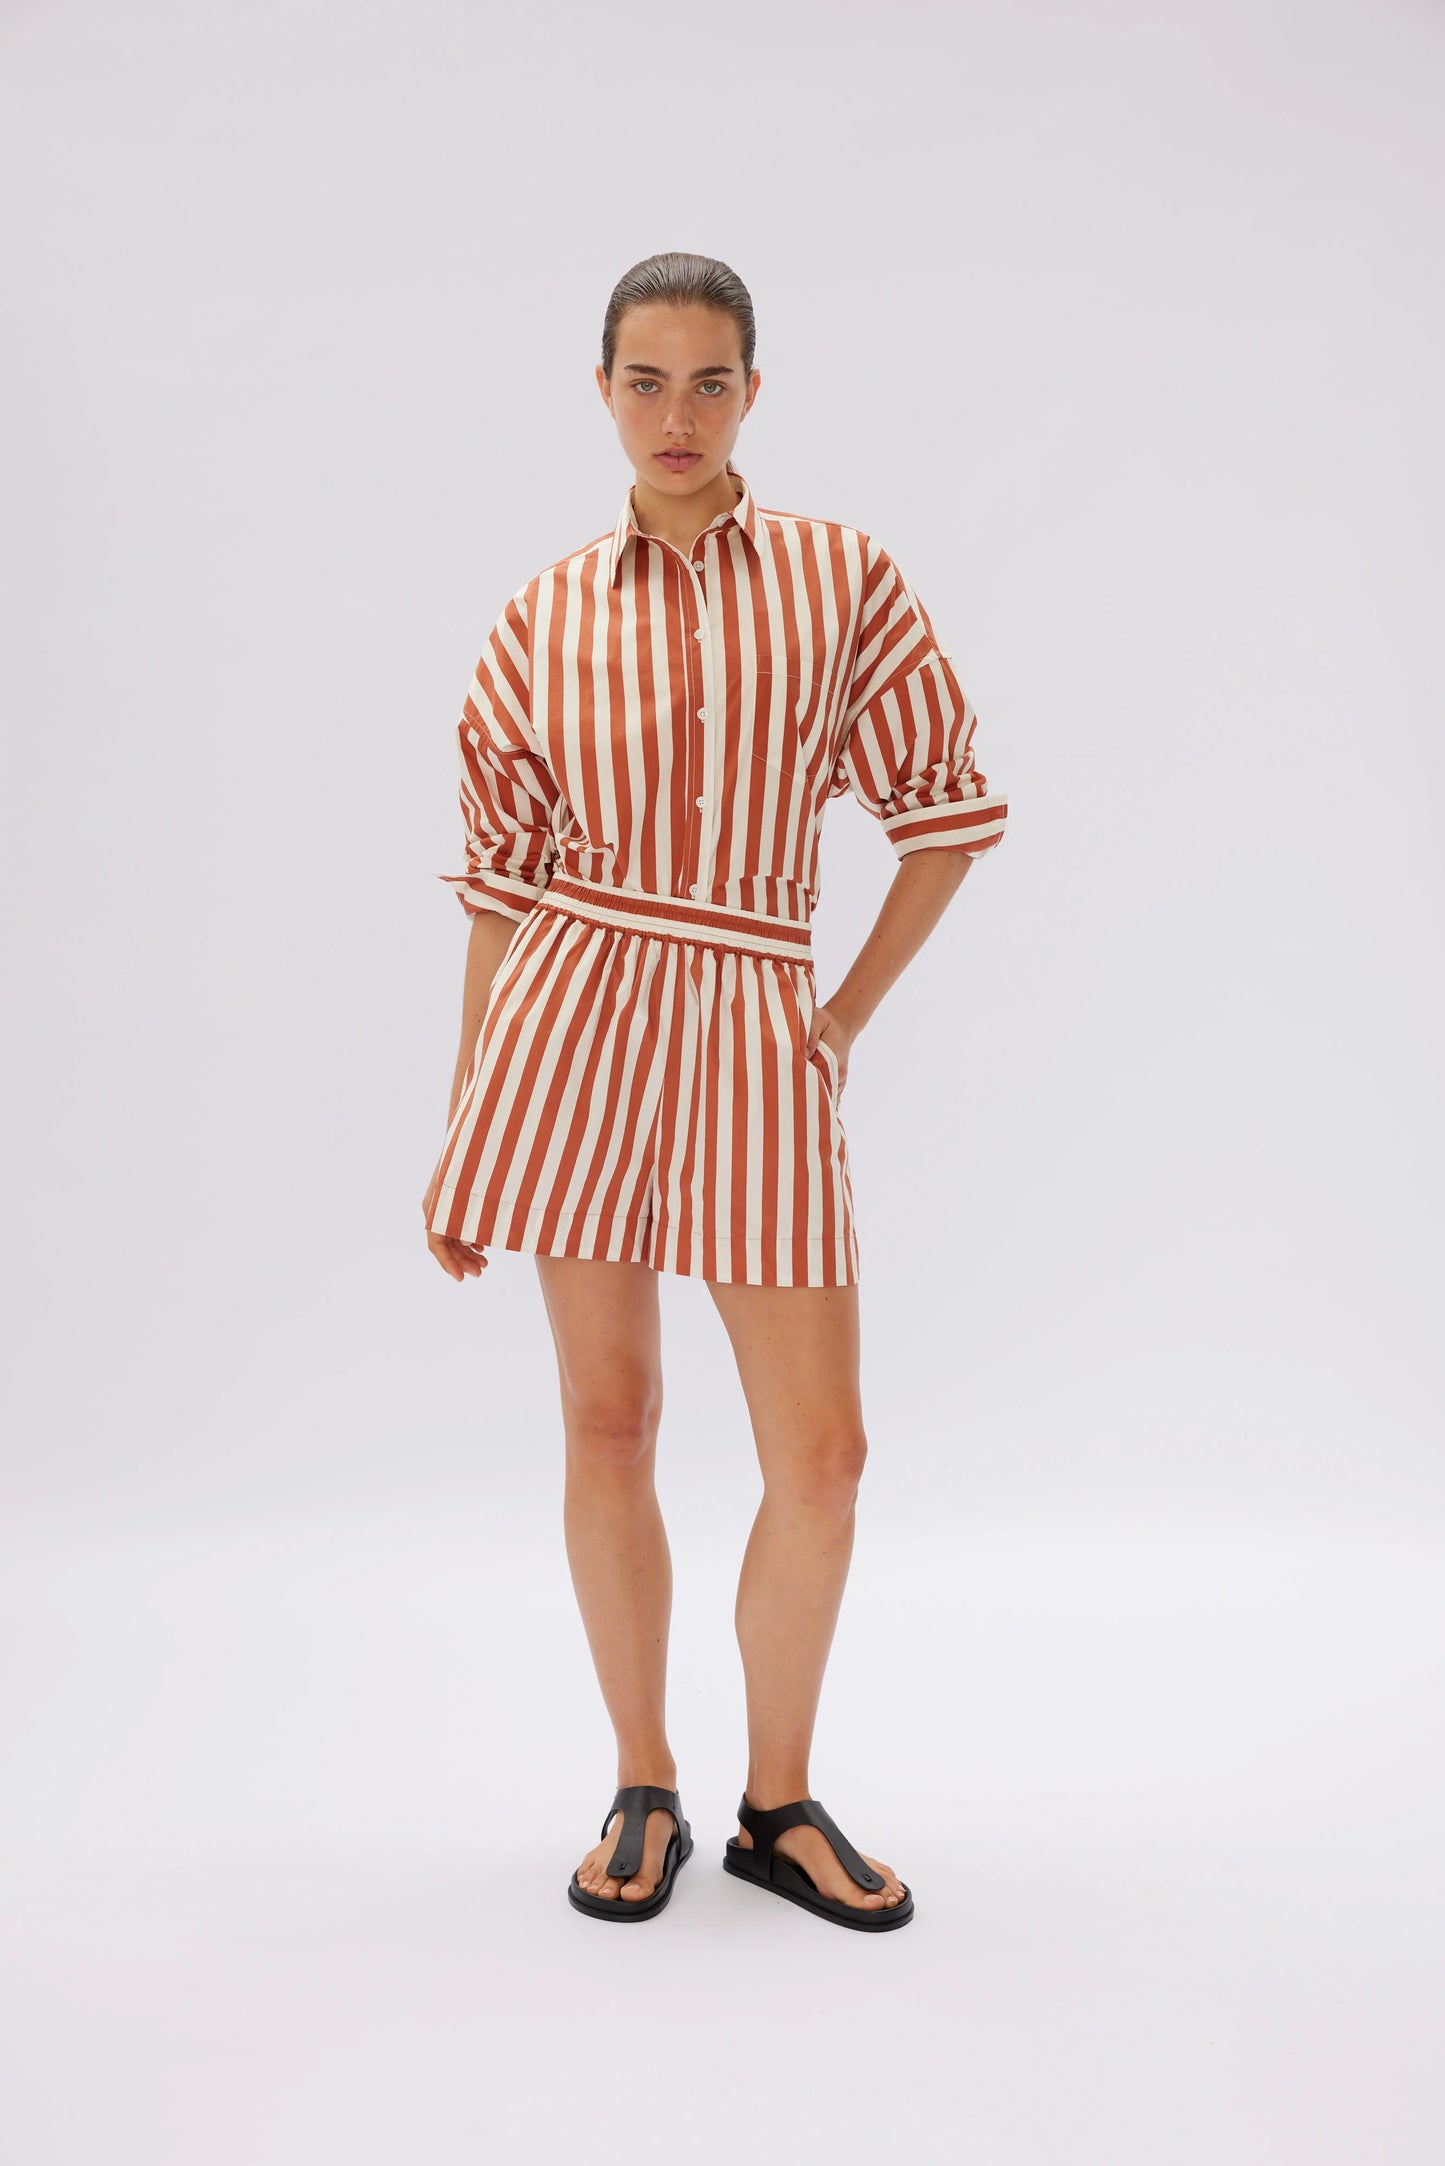 The Chiara Shirt in Rust & Vanilla Stripe